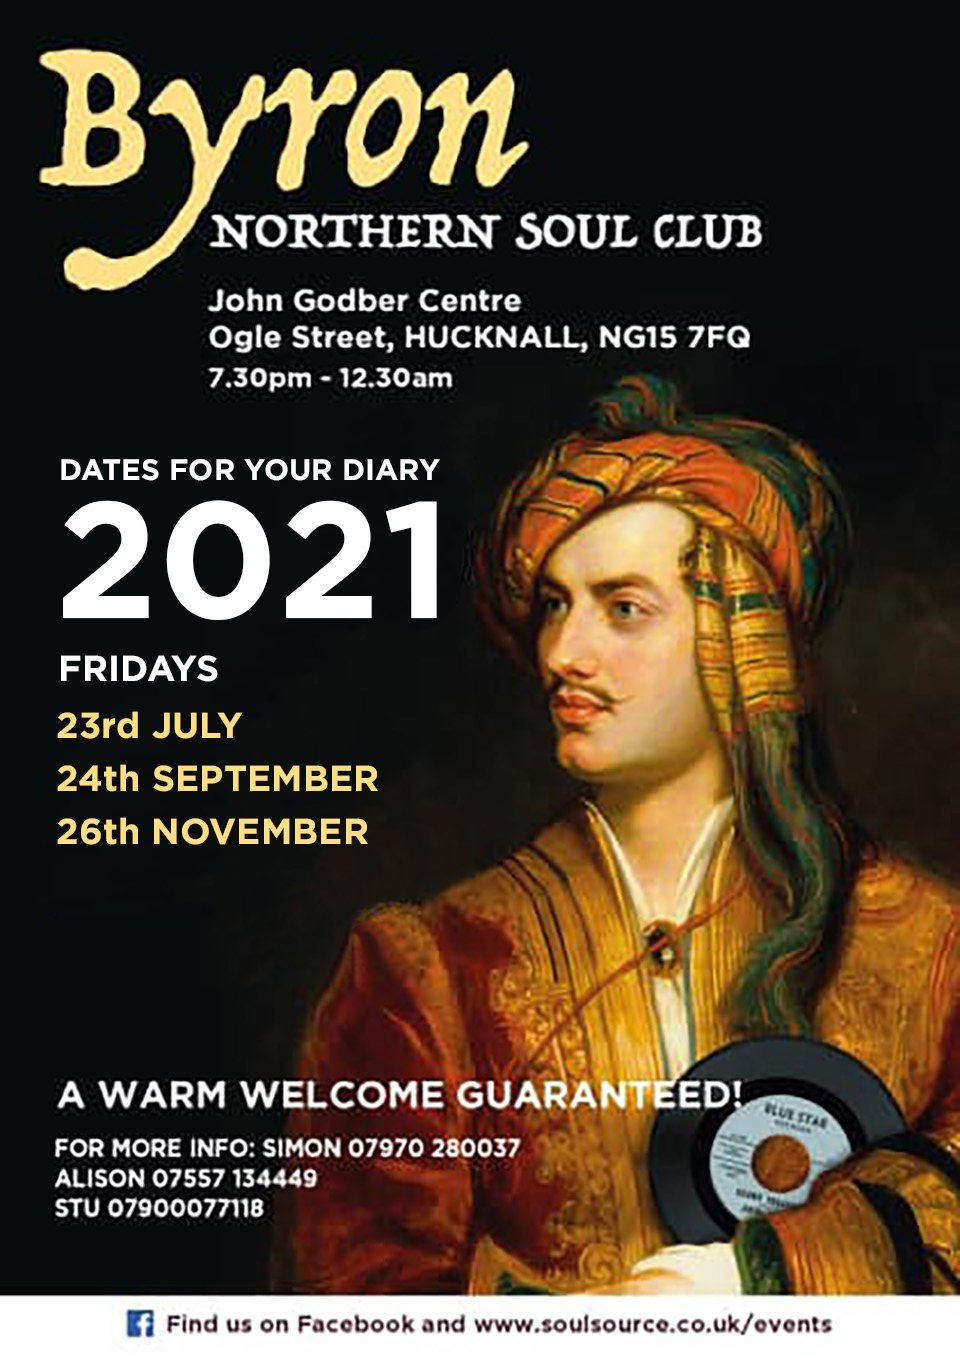 Byron Northern Soul Club event dates 2021